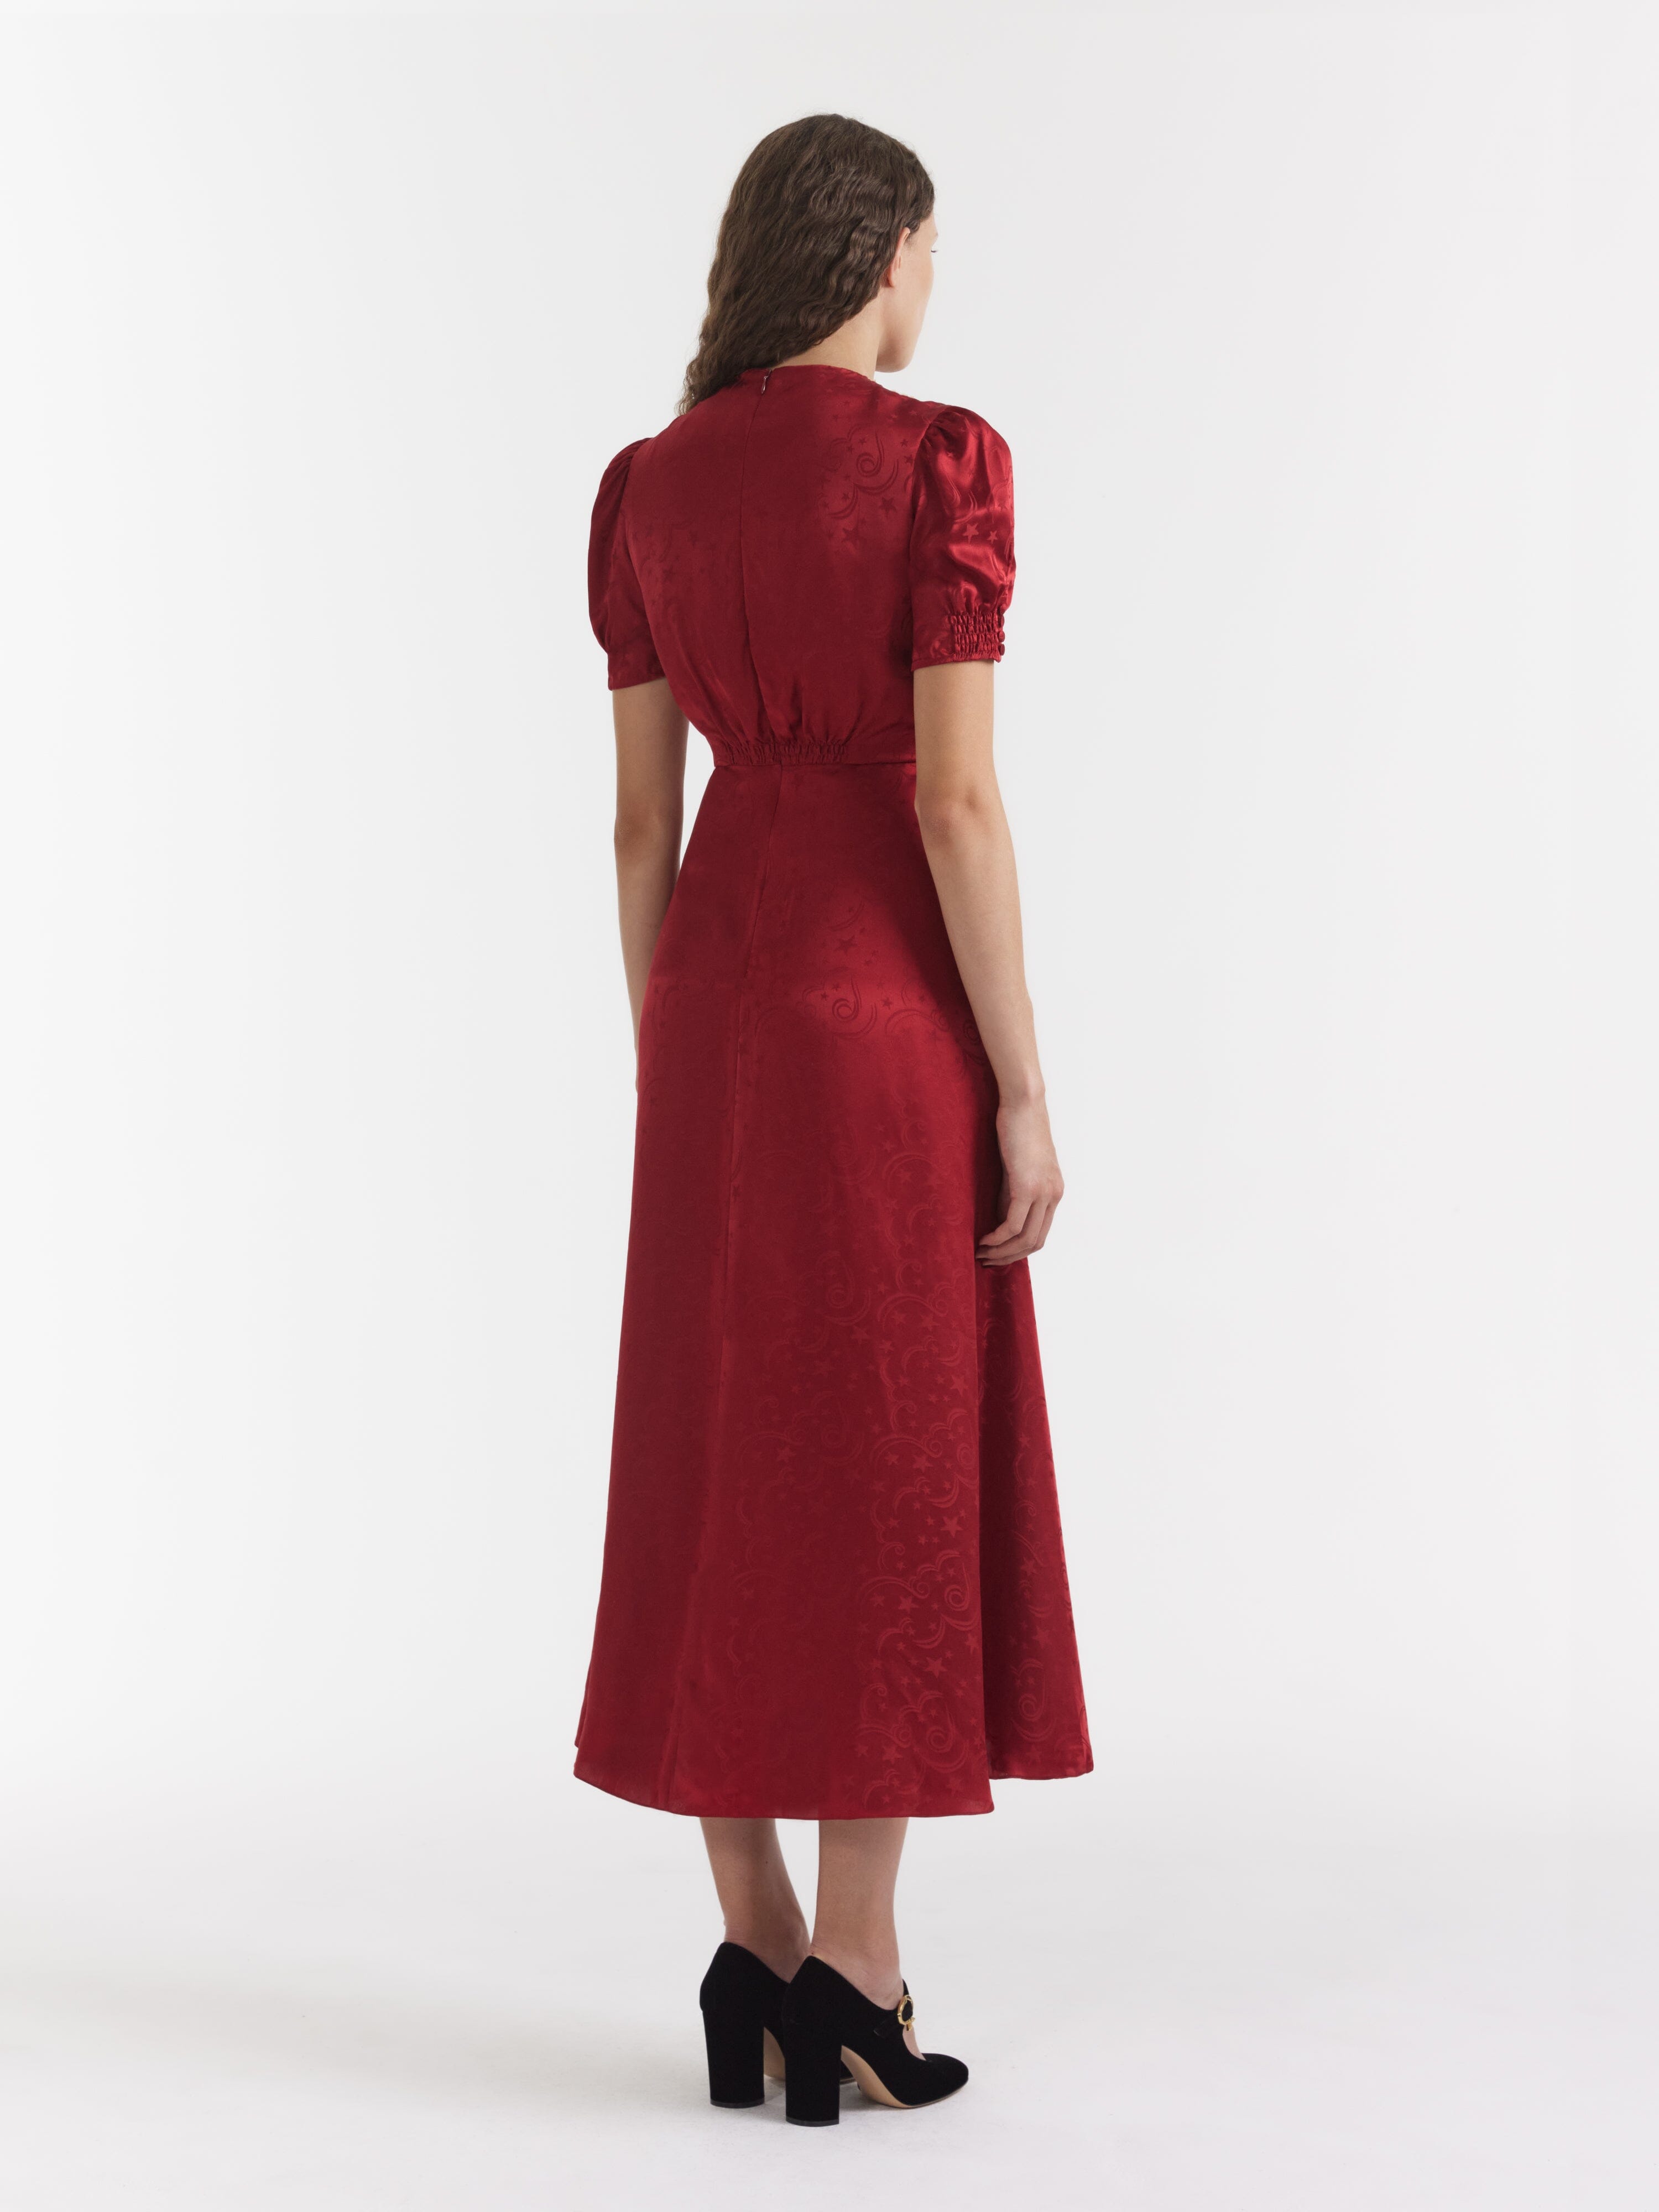 Venyx Lea Long Dress in Deep Red Moonbeam Embroidery